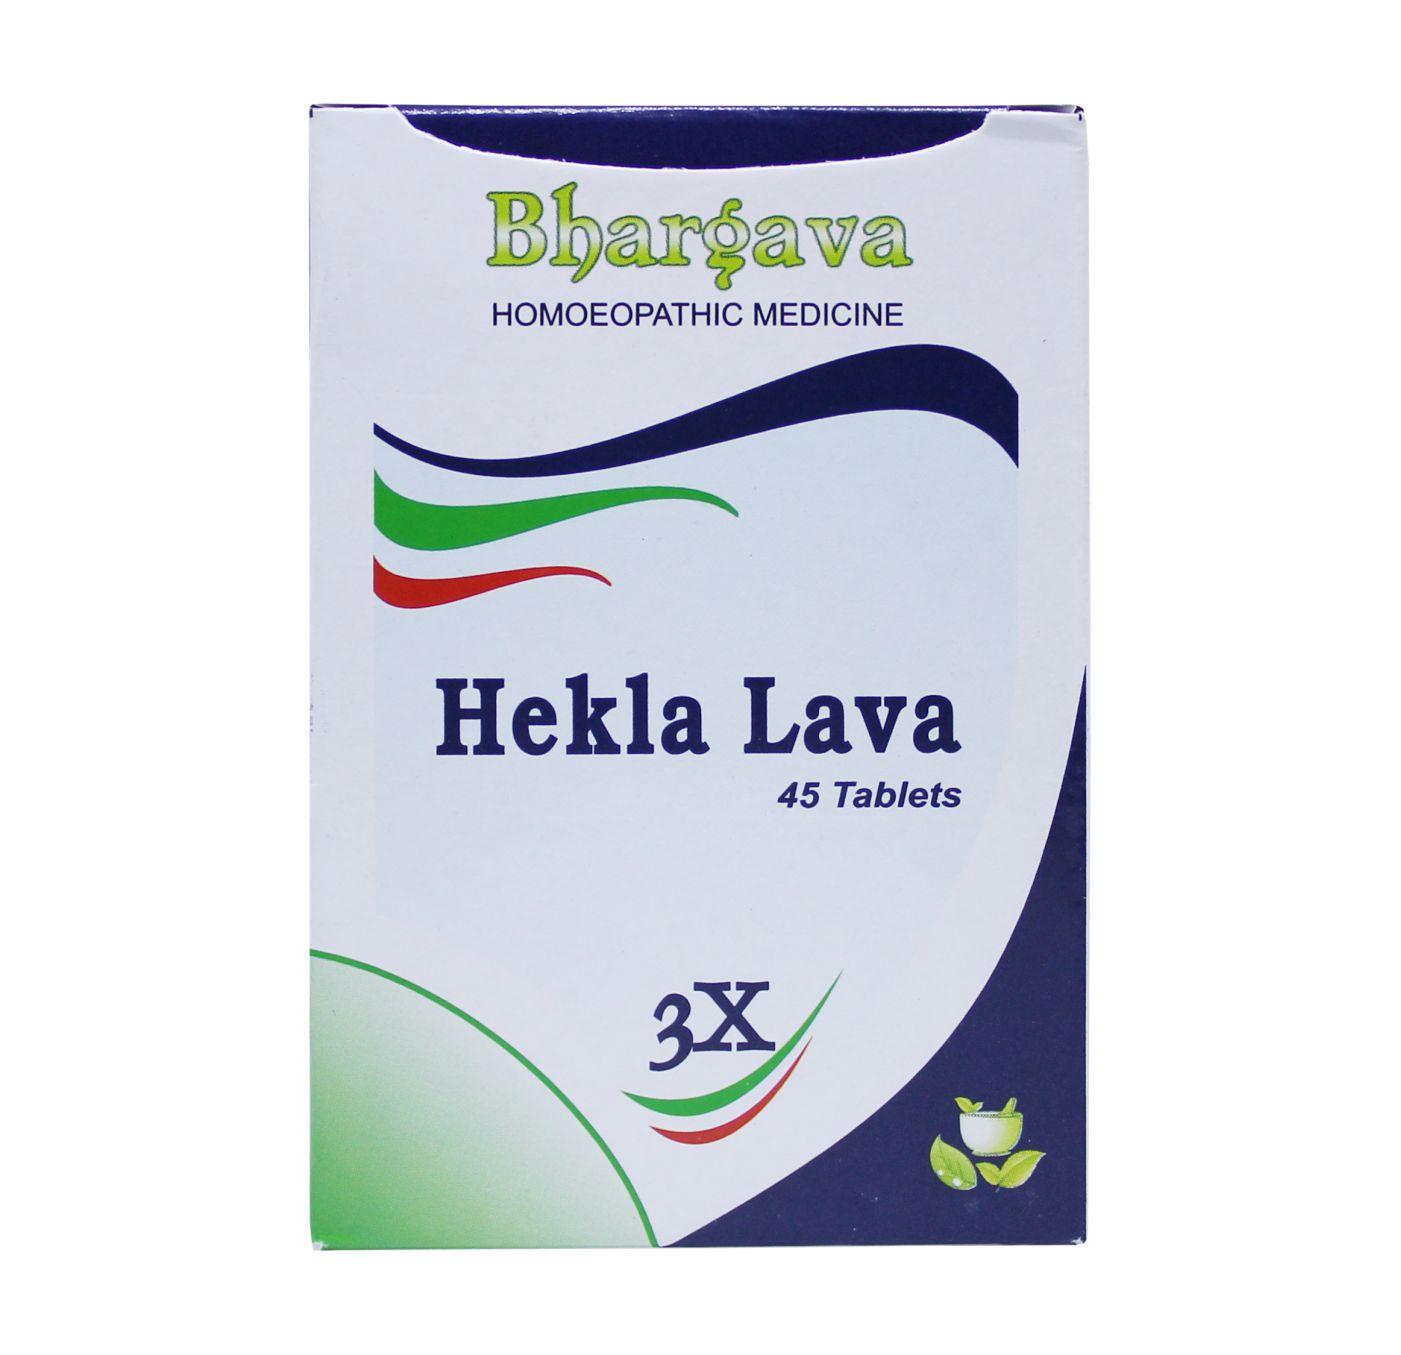 Hekla Lava Tablet 3X Homeopathic Medicine